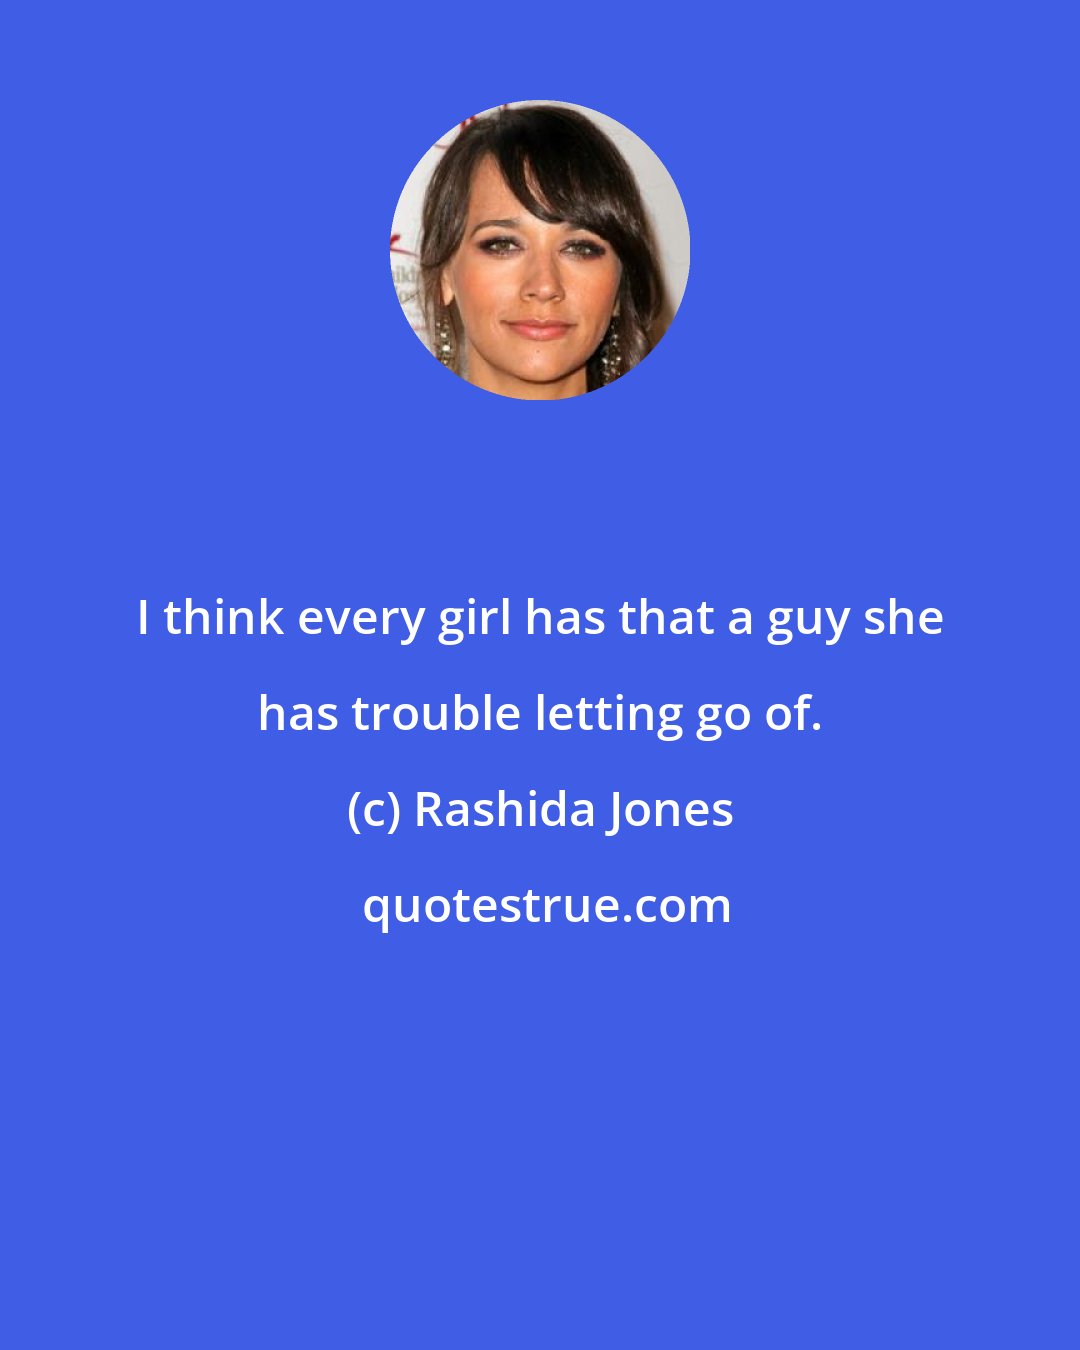 Rashida Jones: I think every girl has that a guy she has trouble letting go of.